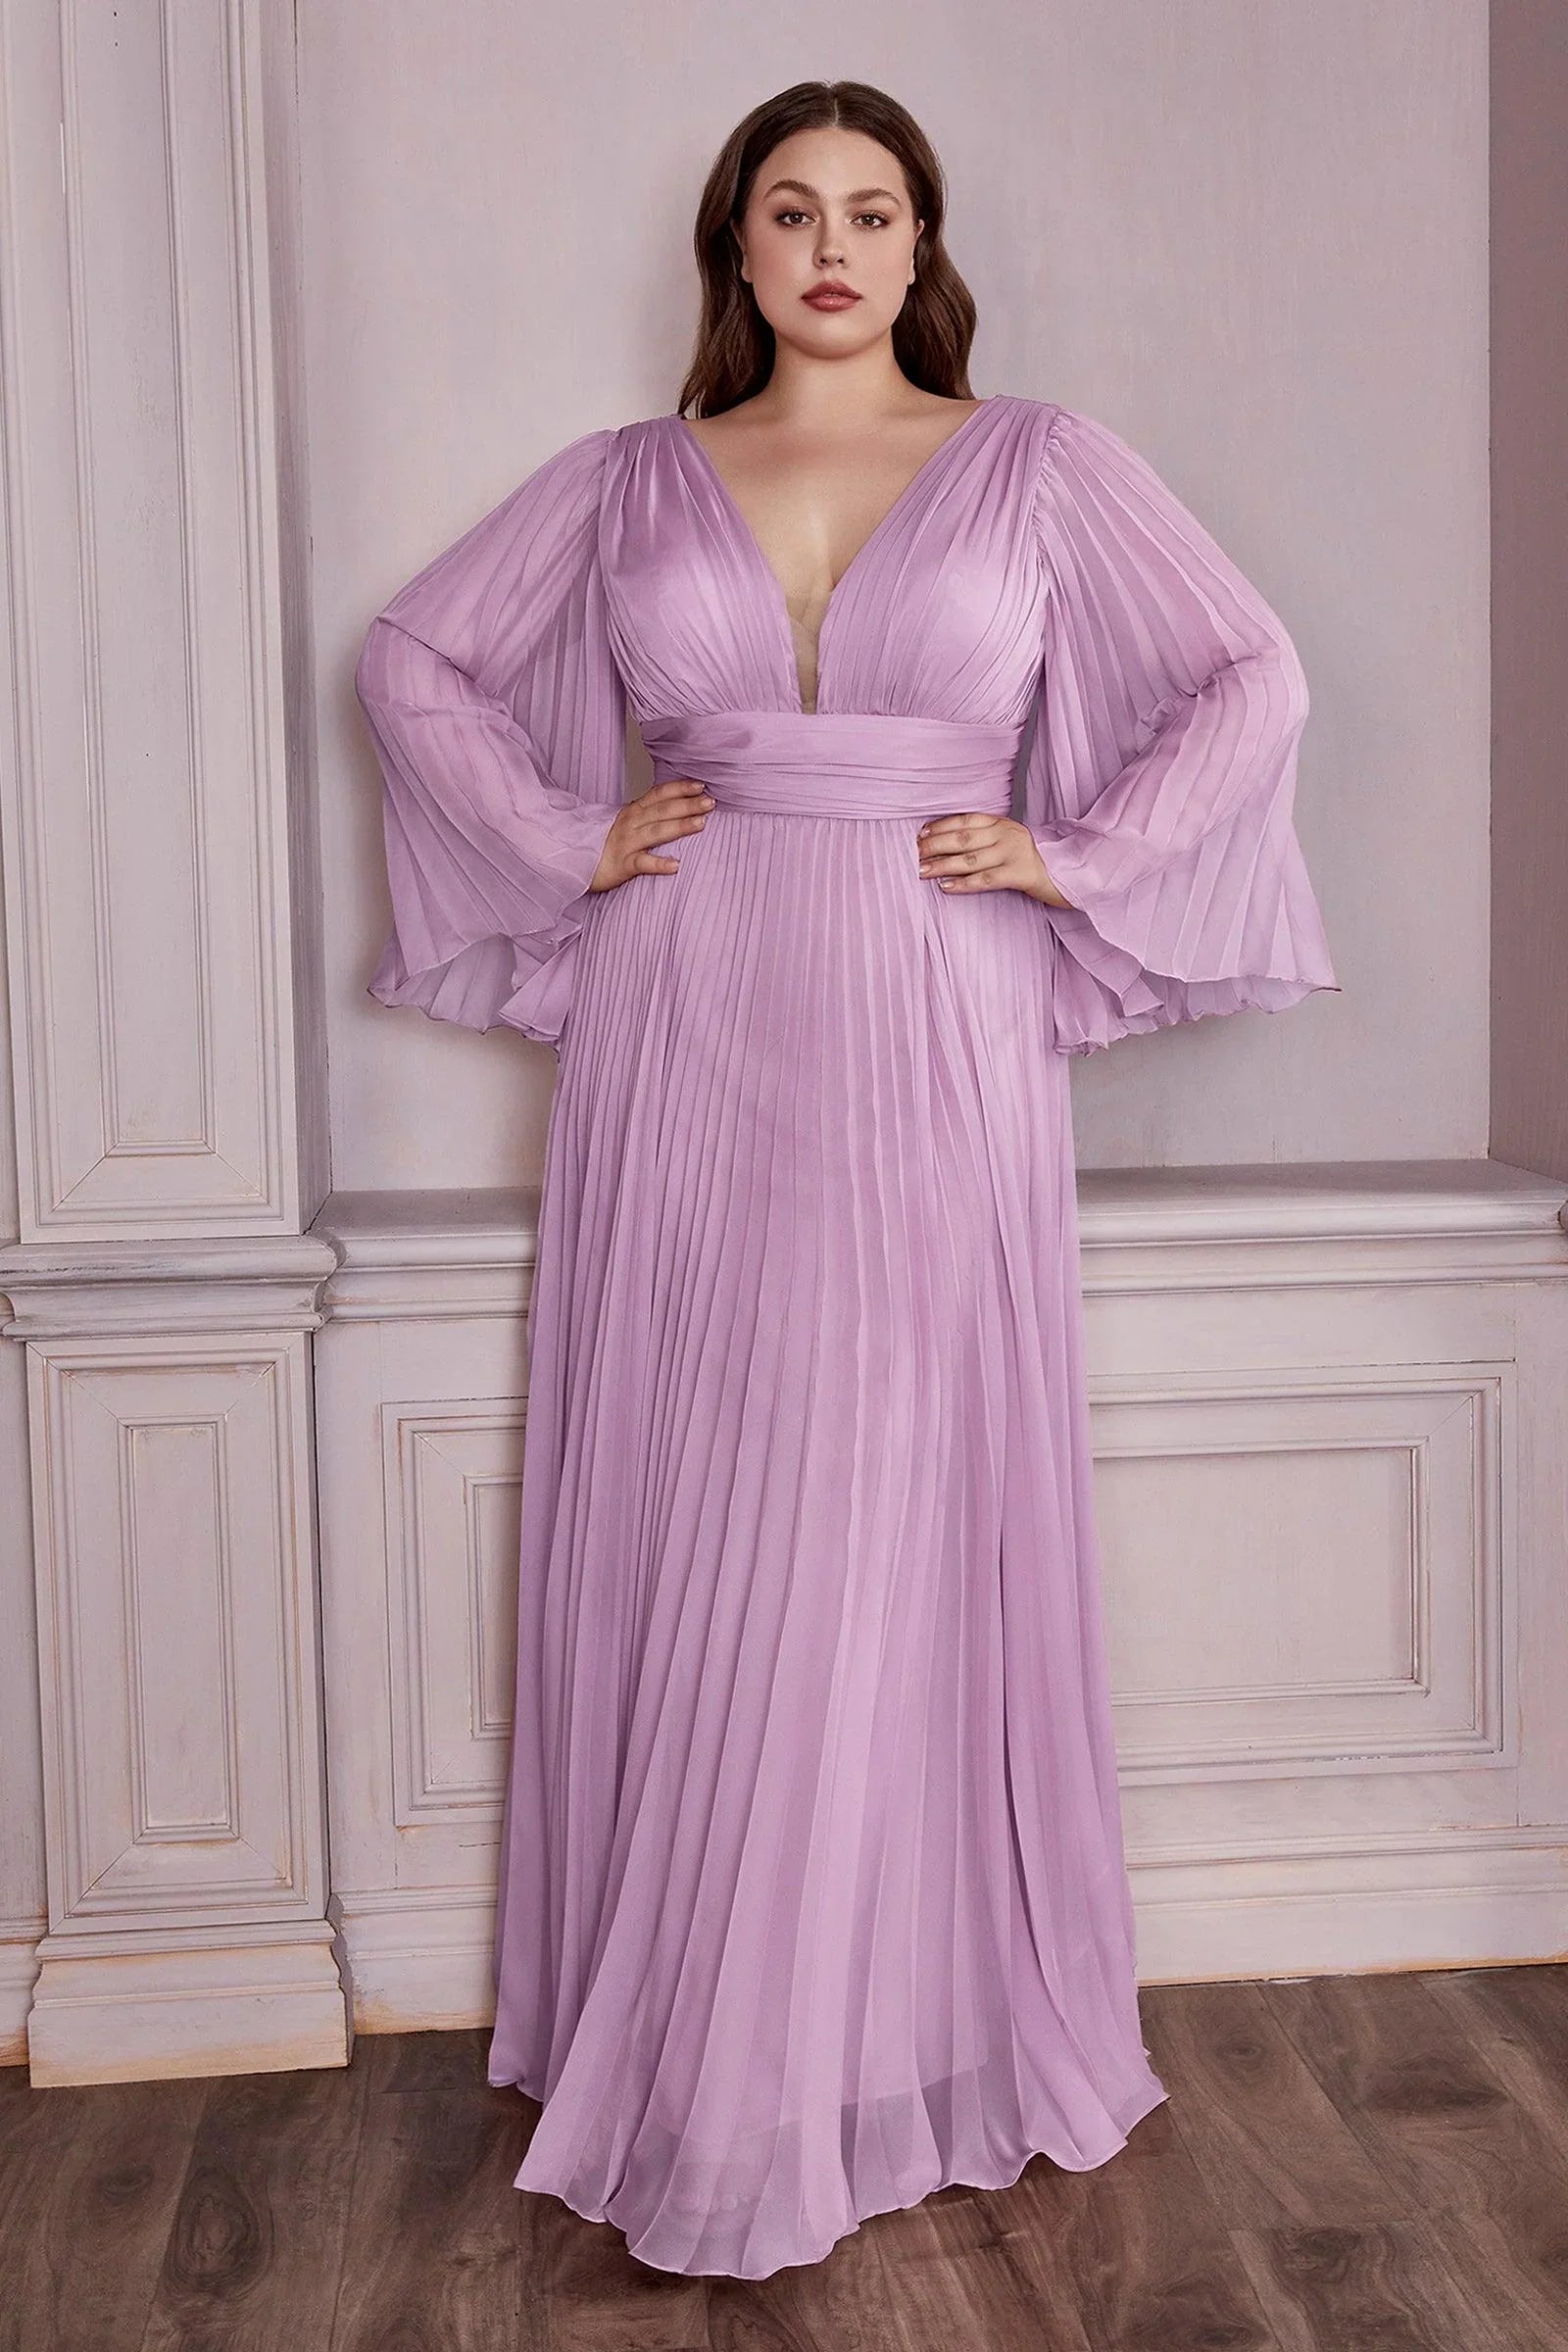 different shades of purple bridesmaid dresses mix n match #wedding… |  Purple bridesmaid dresses, Lavender bridesmaid dresses, Bridesmaid dresses  mismatched purple